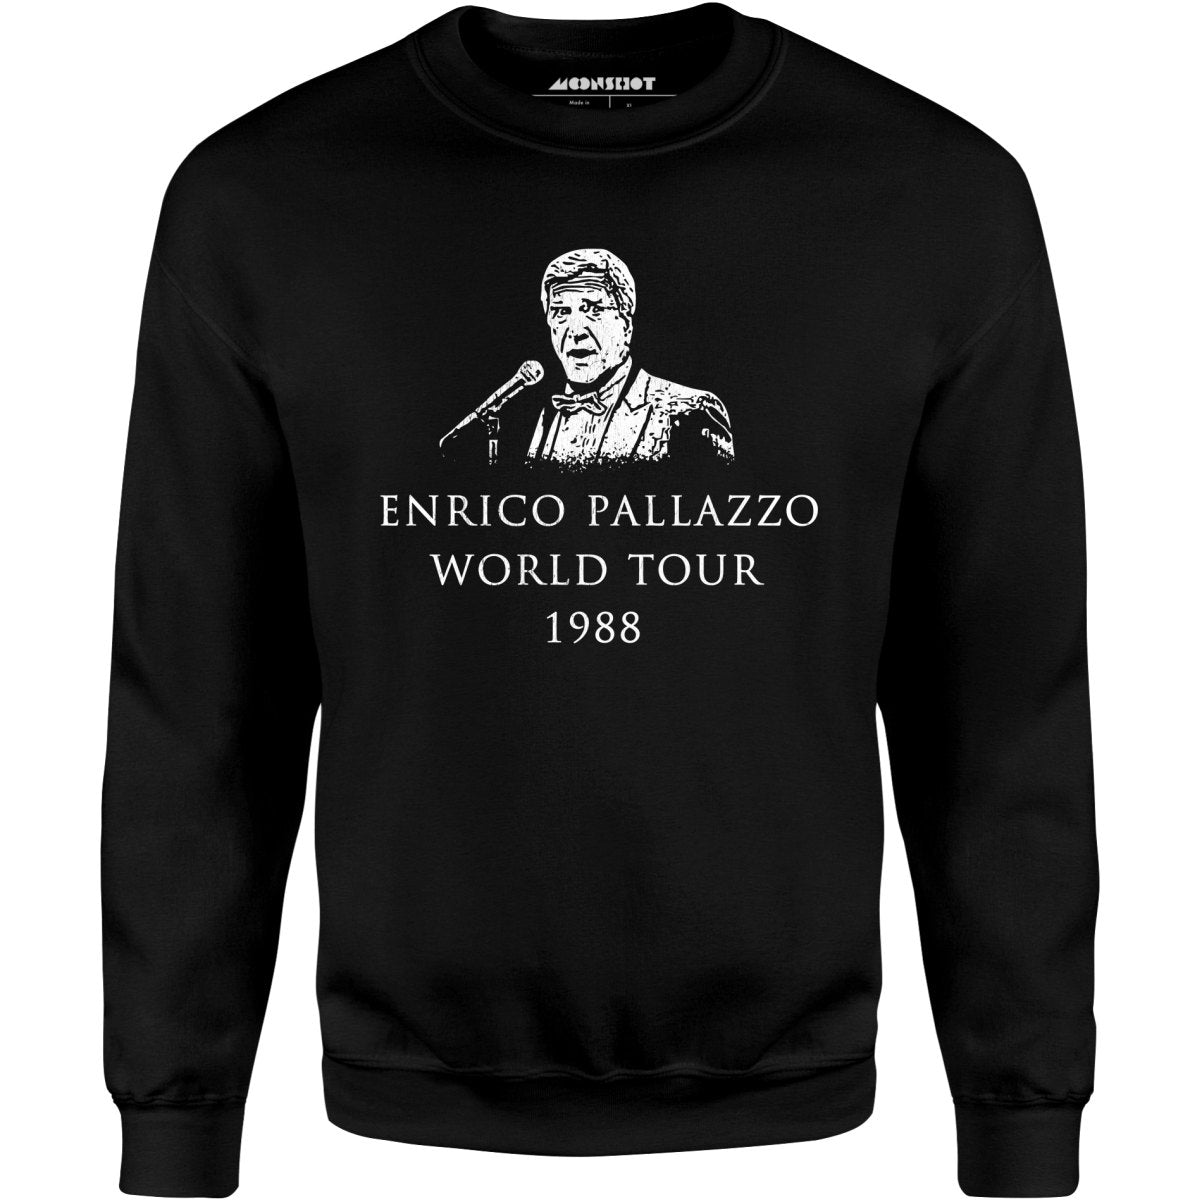 Enrico Pallazzo World Tour - Unisex Sweatshirt